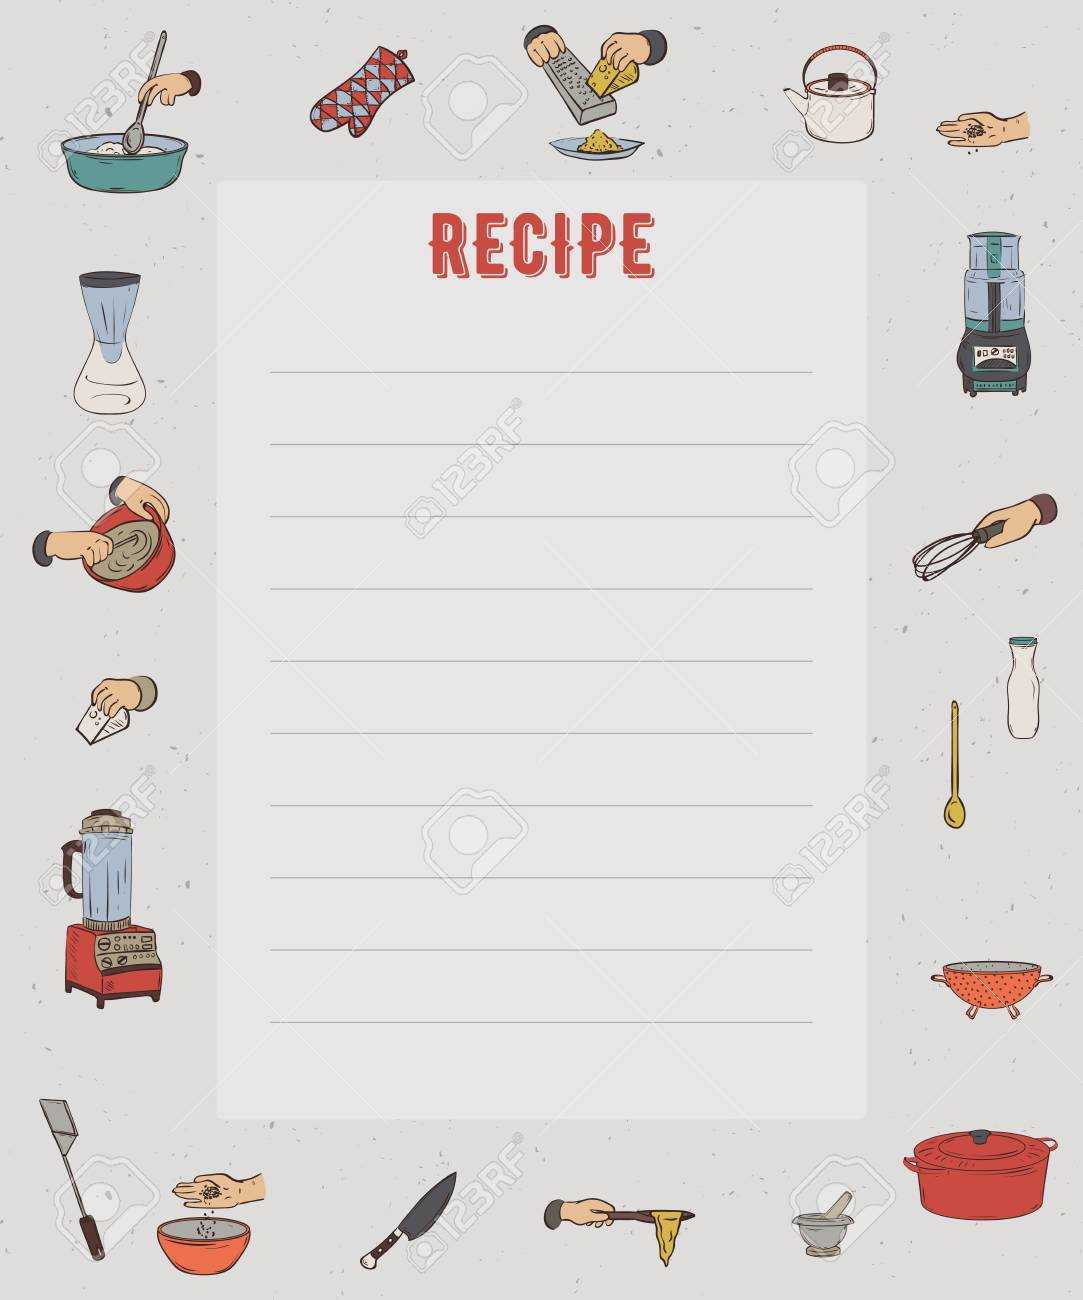 Recipe Card. Cookbook Page. Design Template With Kitchen Utensils.. Within Recipe Card Design Template